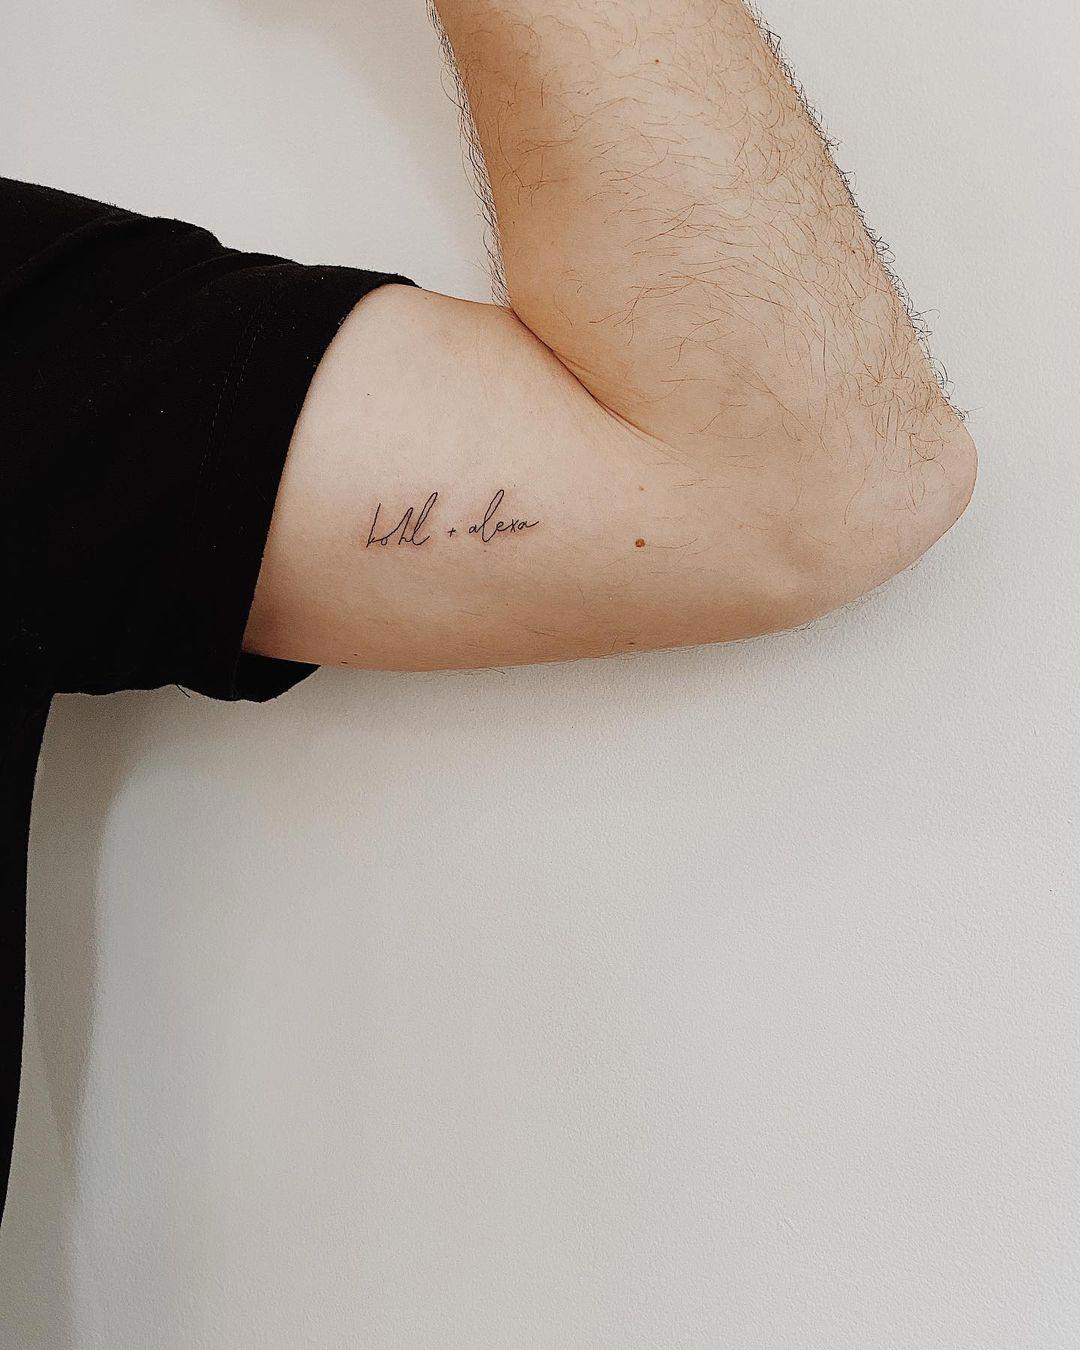 Tatuaje de nombres en el brazo